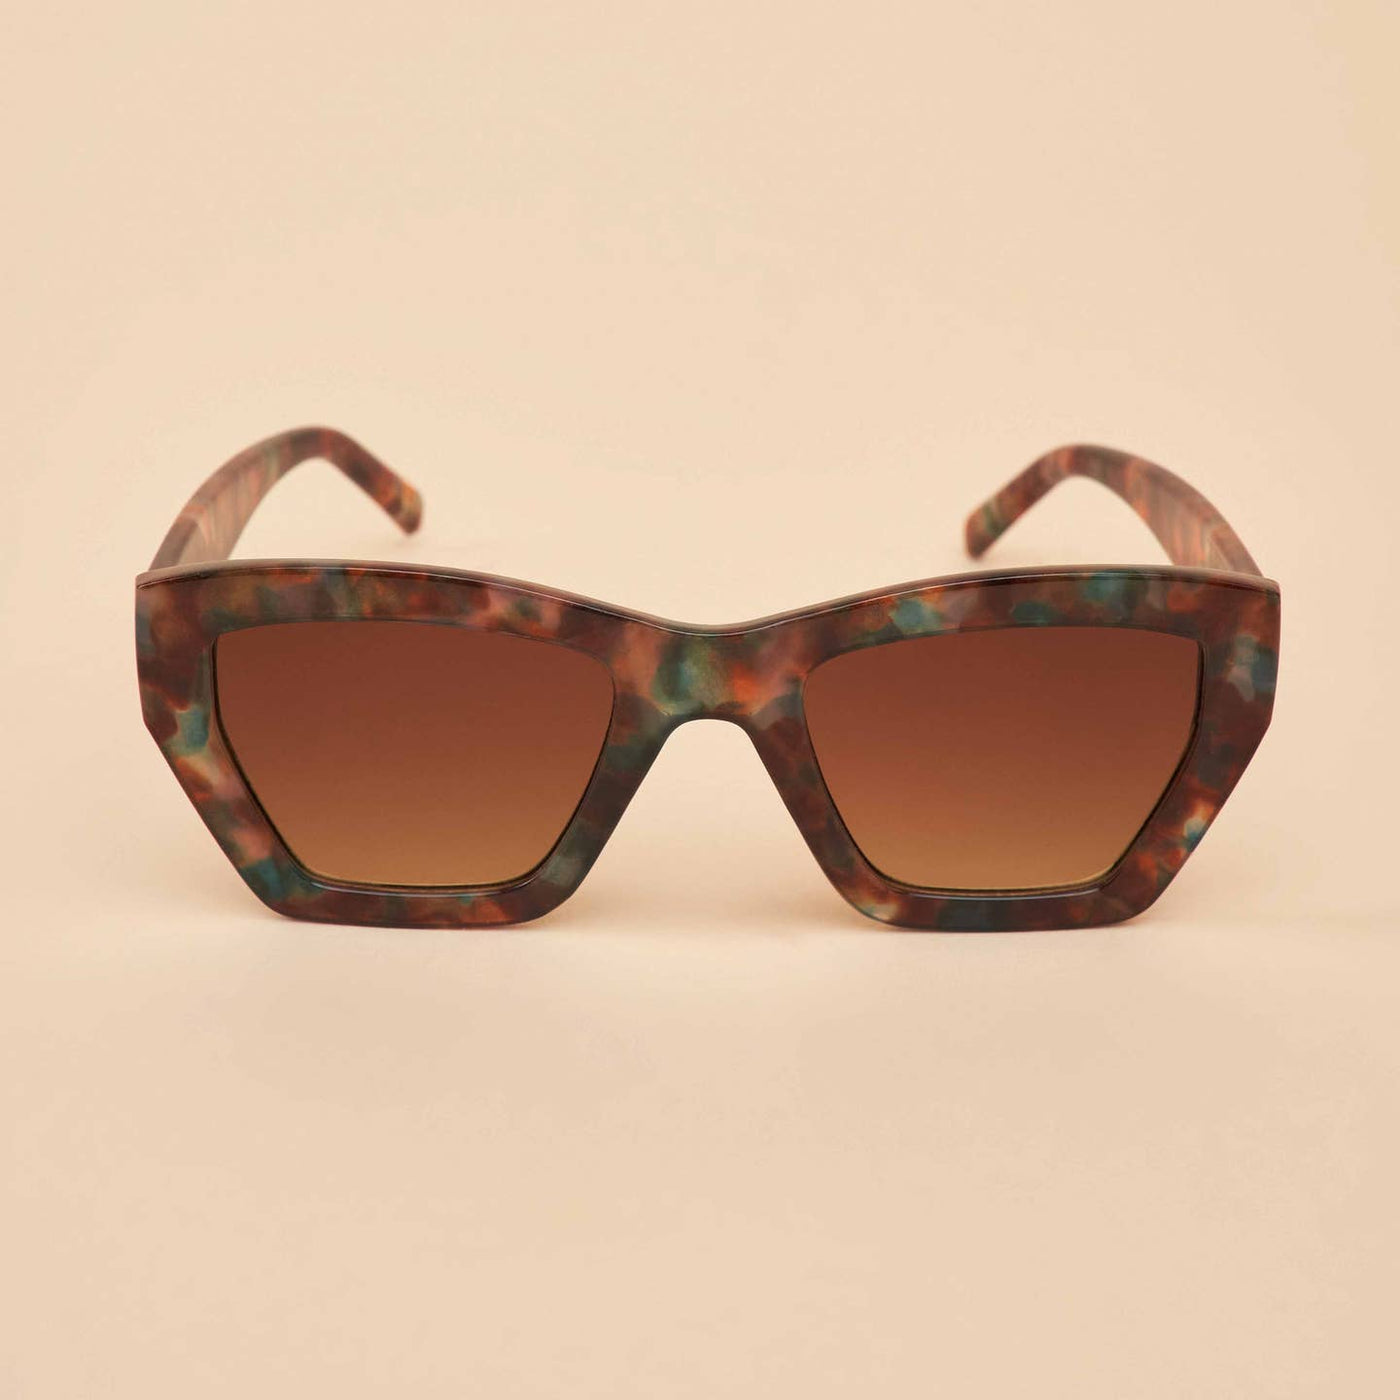 Arwen Limited Edition Sunglasses - Ocean Tortoiseshell